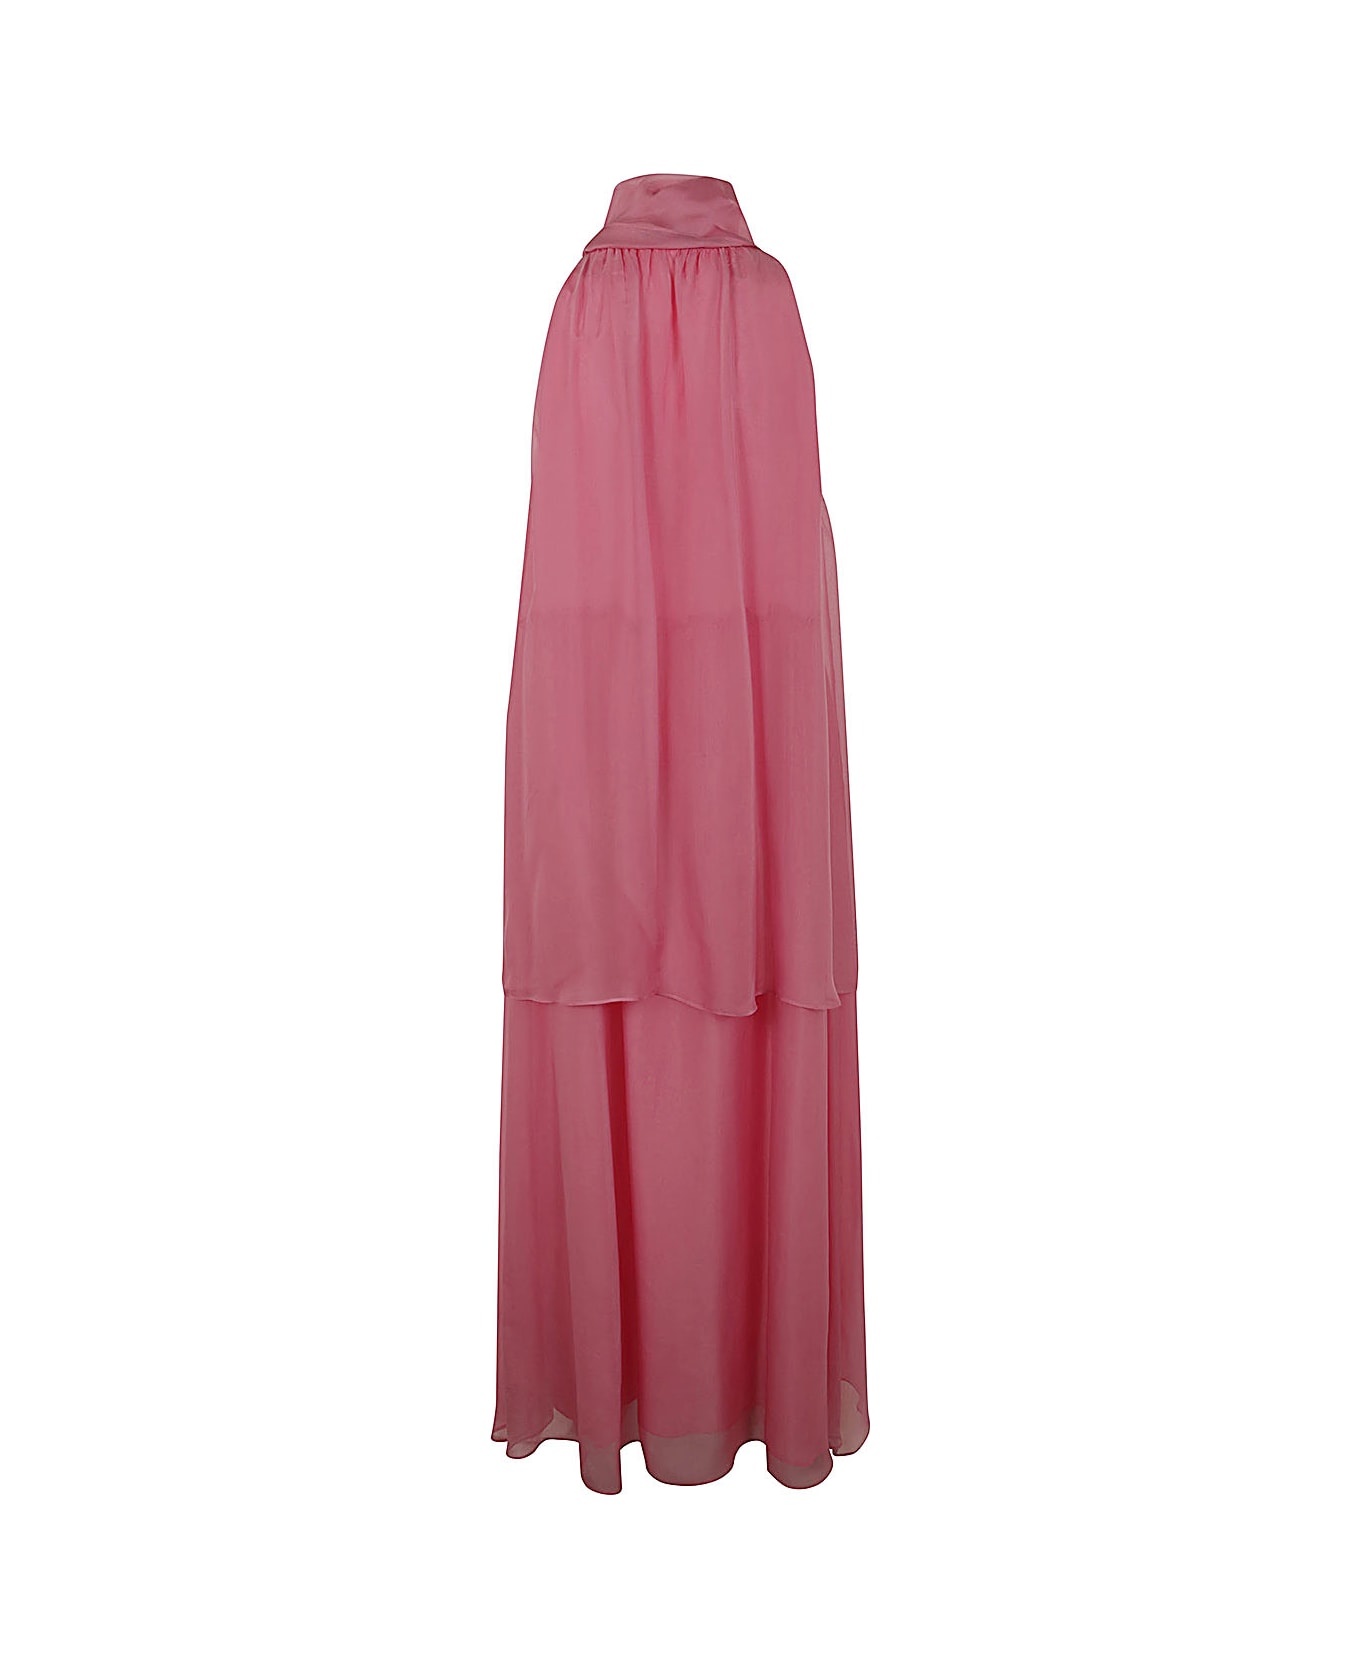 Seventy Sleeveless Long Dress - Pink